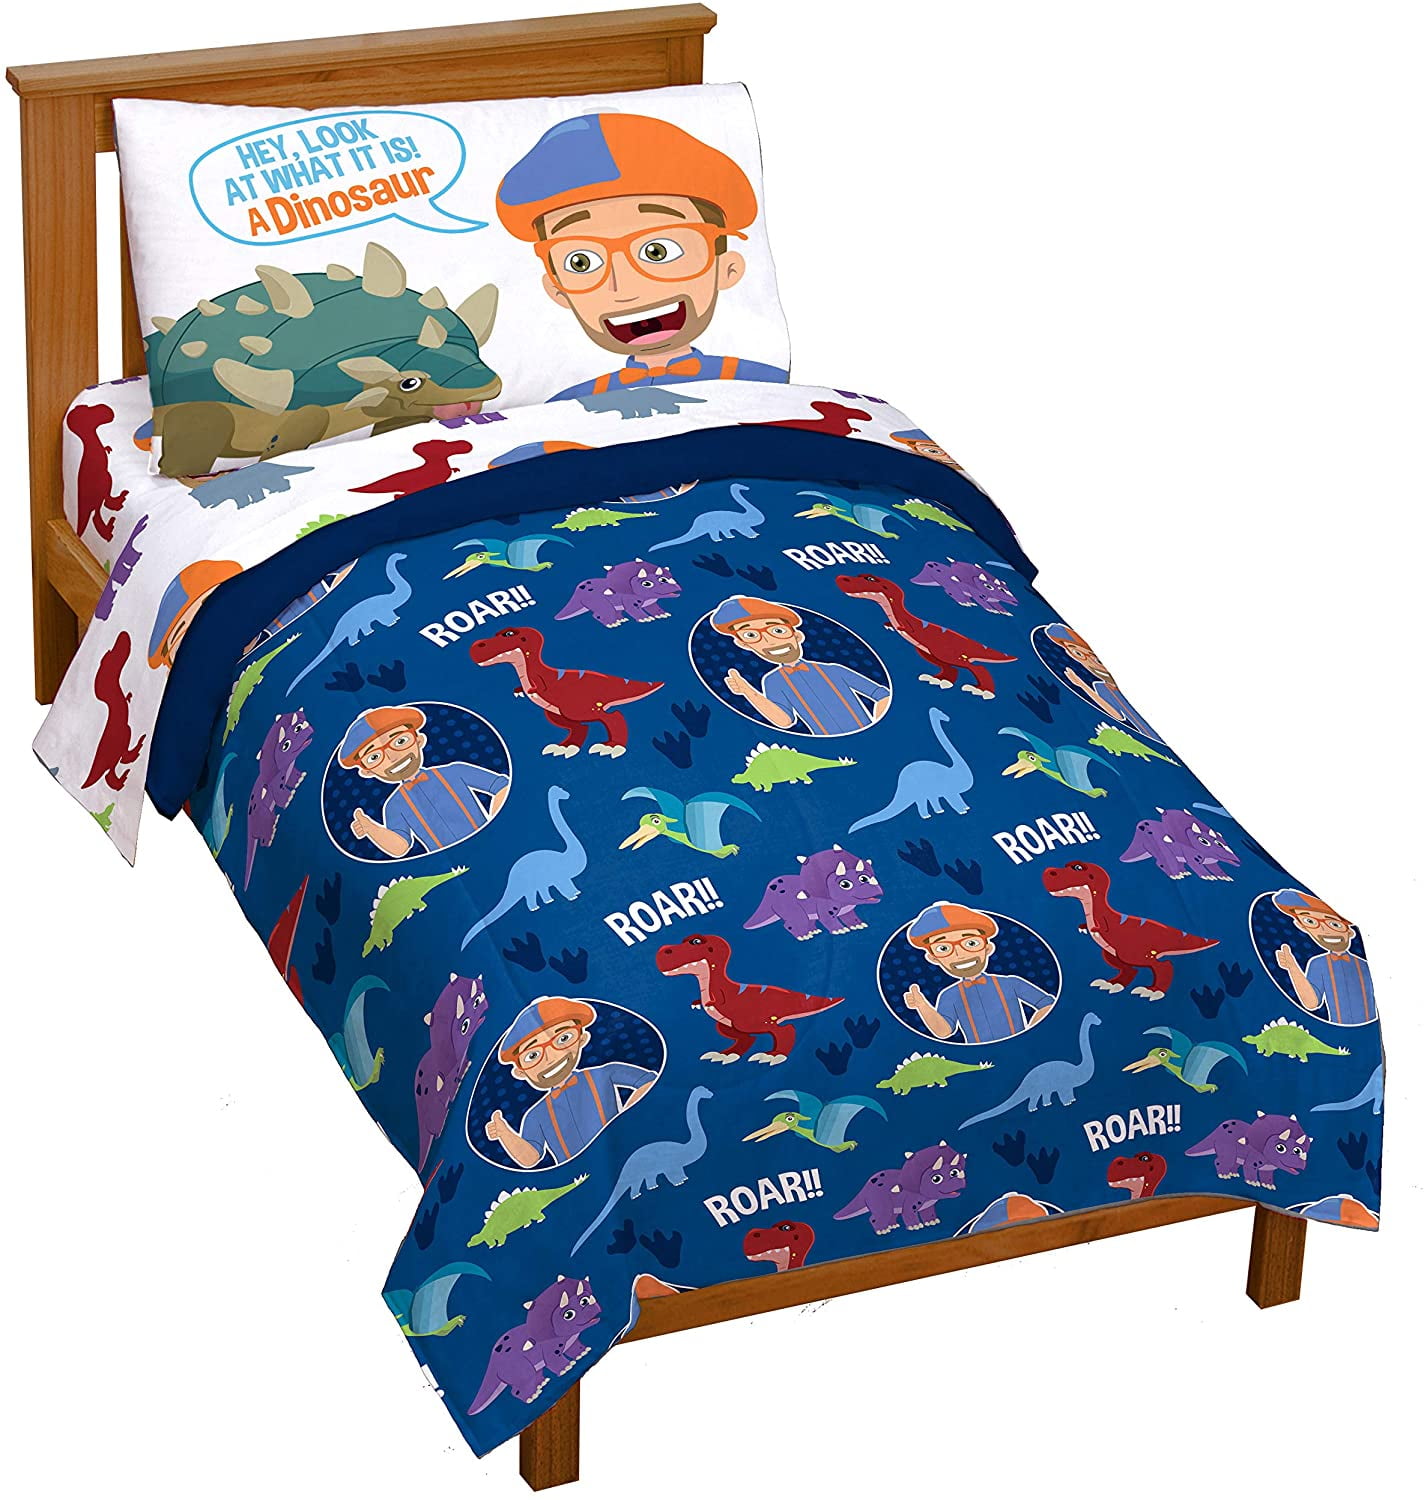 Super Soft Fade Resistant Microfiber Bedding Includes Comforter /& Sheet Set Jay Franco Trend Collector Believe 4 Piece Toddler Bed Set